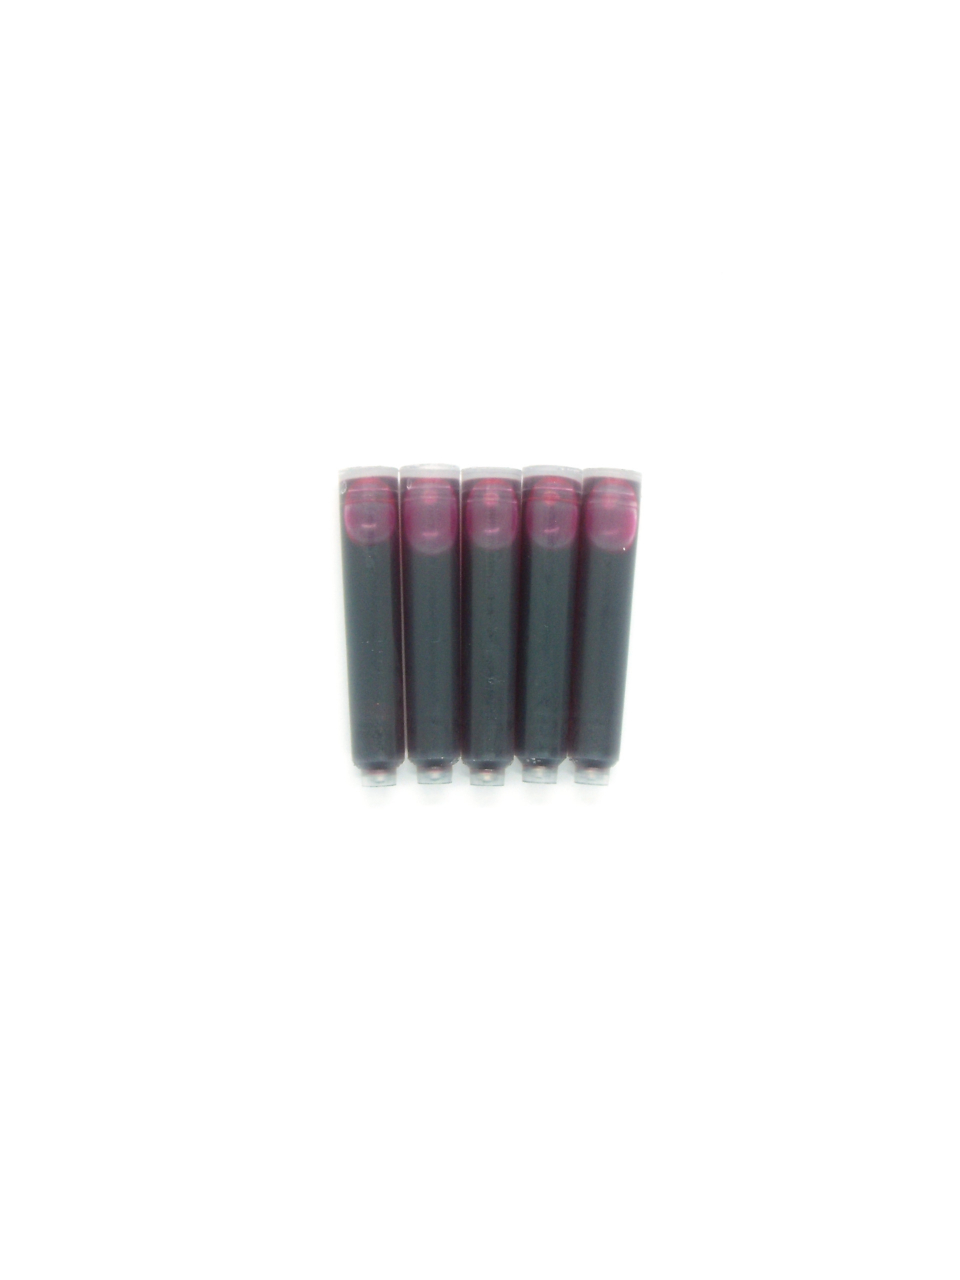 PenConverter Ink Cartridges For Kaiduoli Fountain Pens (Pink)